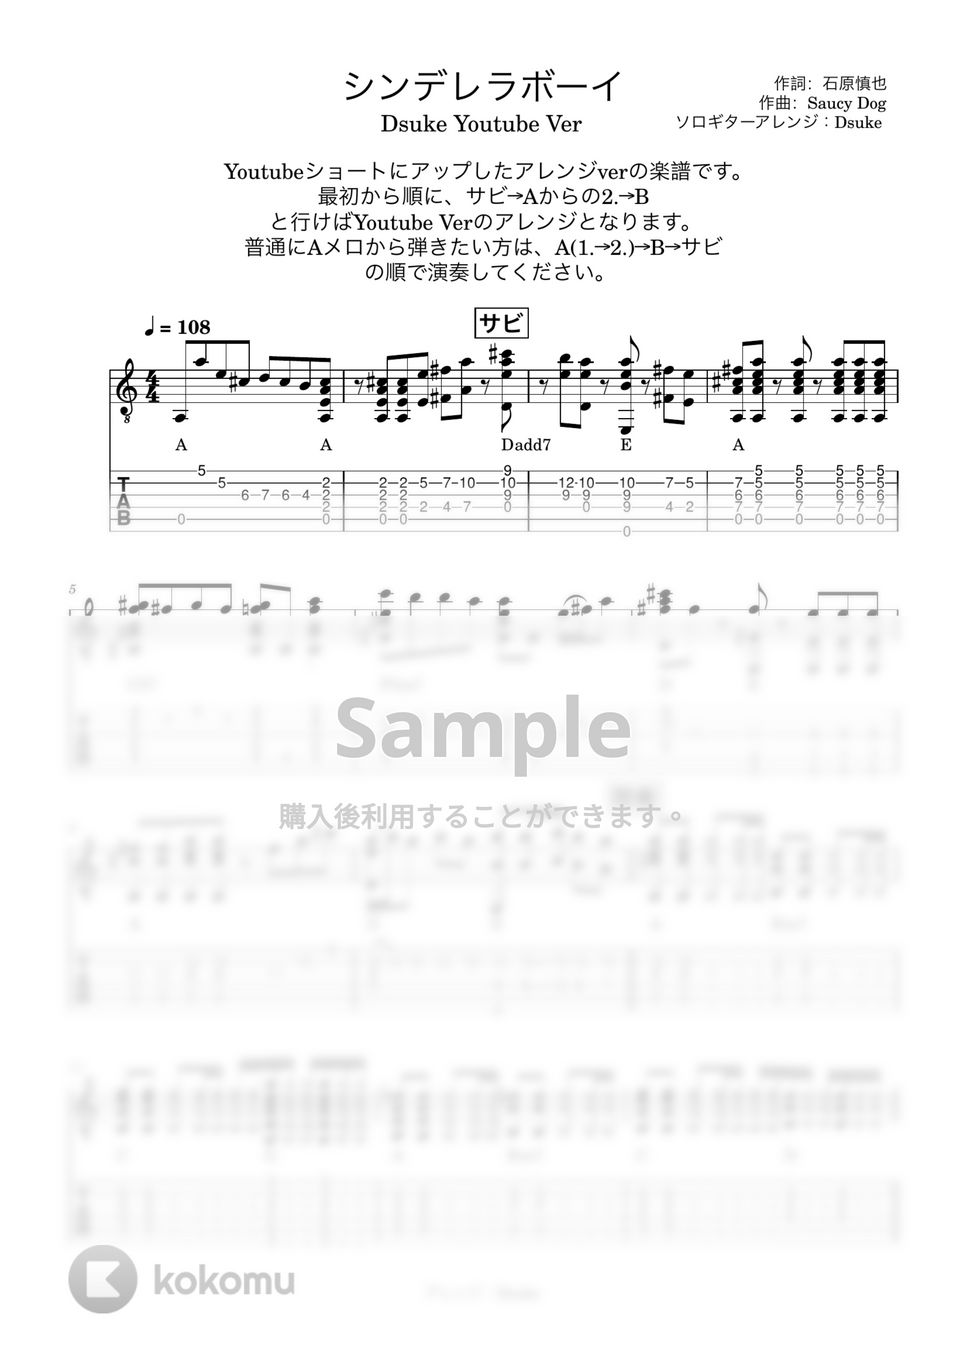 Saucy Dog - シンデレラボーイ (ピック弾きソロギターアレンジ) by Dsuke